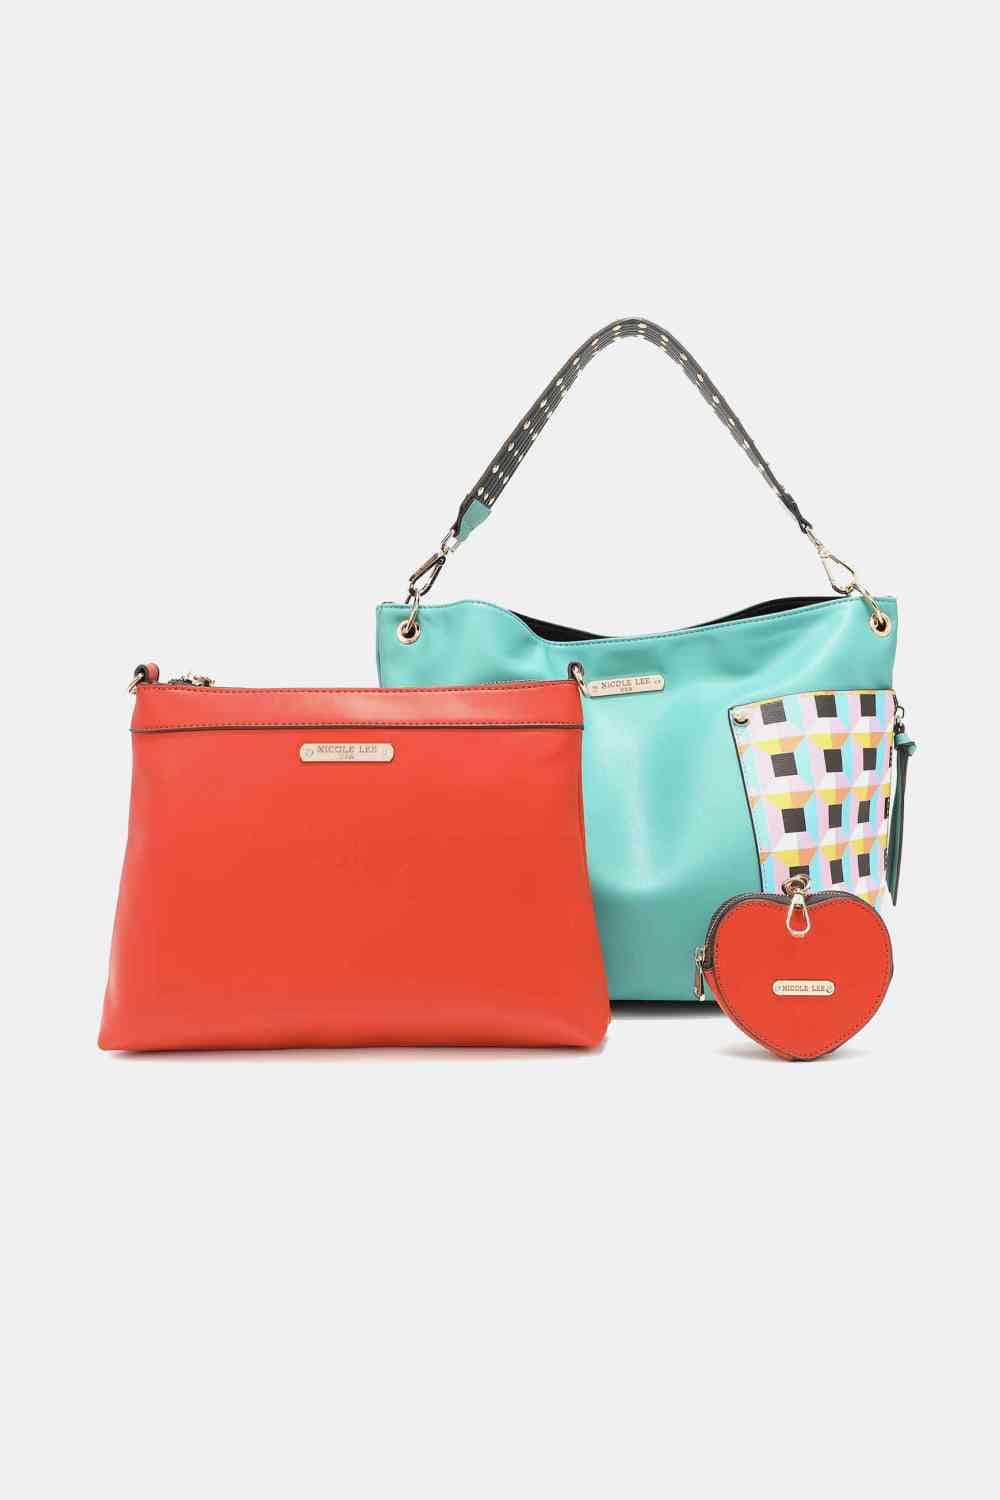 The802Gypsy Handbags, Wallets & Cases Turquoise / One Size GYPSY-Nicole Lee USA-3-Piece Handbag Set